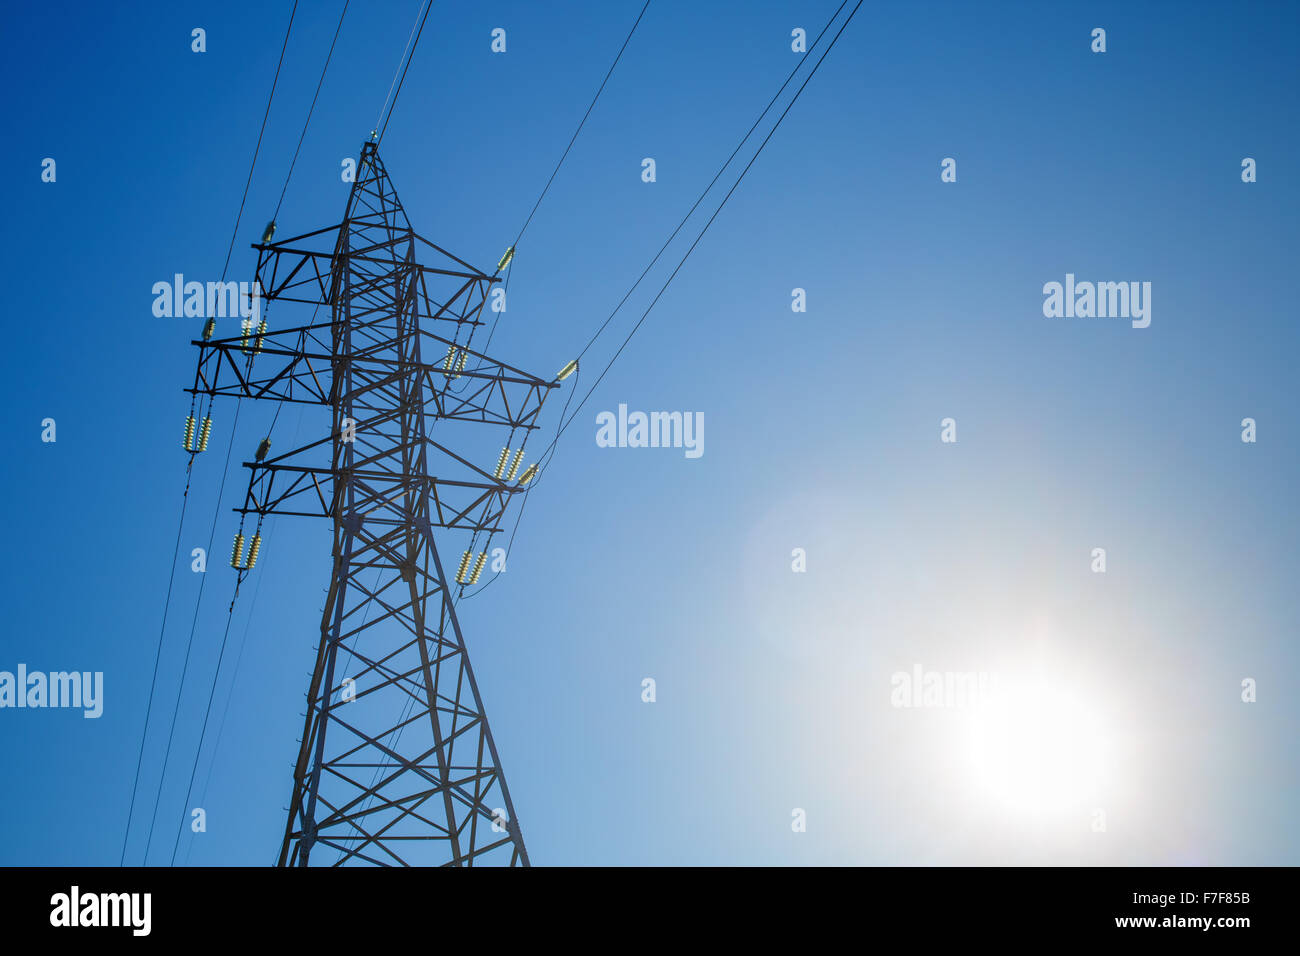 High voltage tower on blue sky background. Electricity transmission pylon. Stock Photo